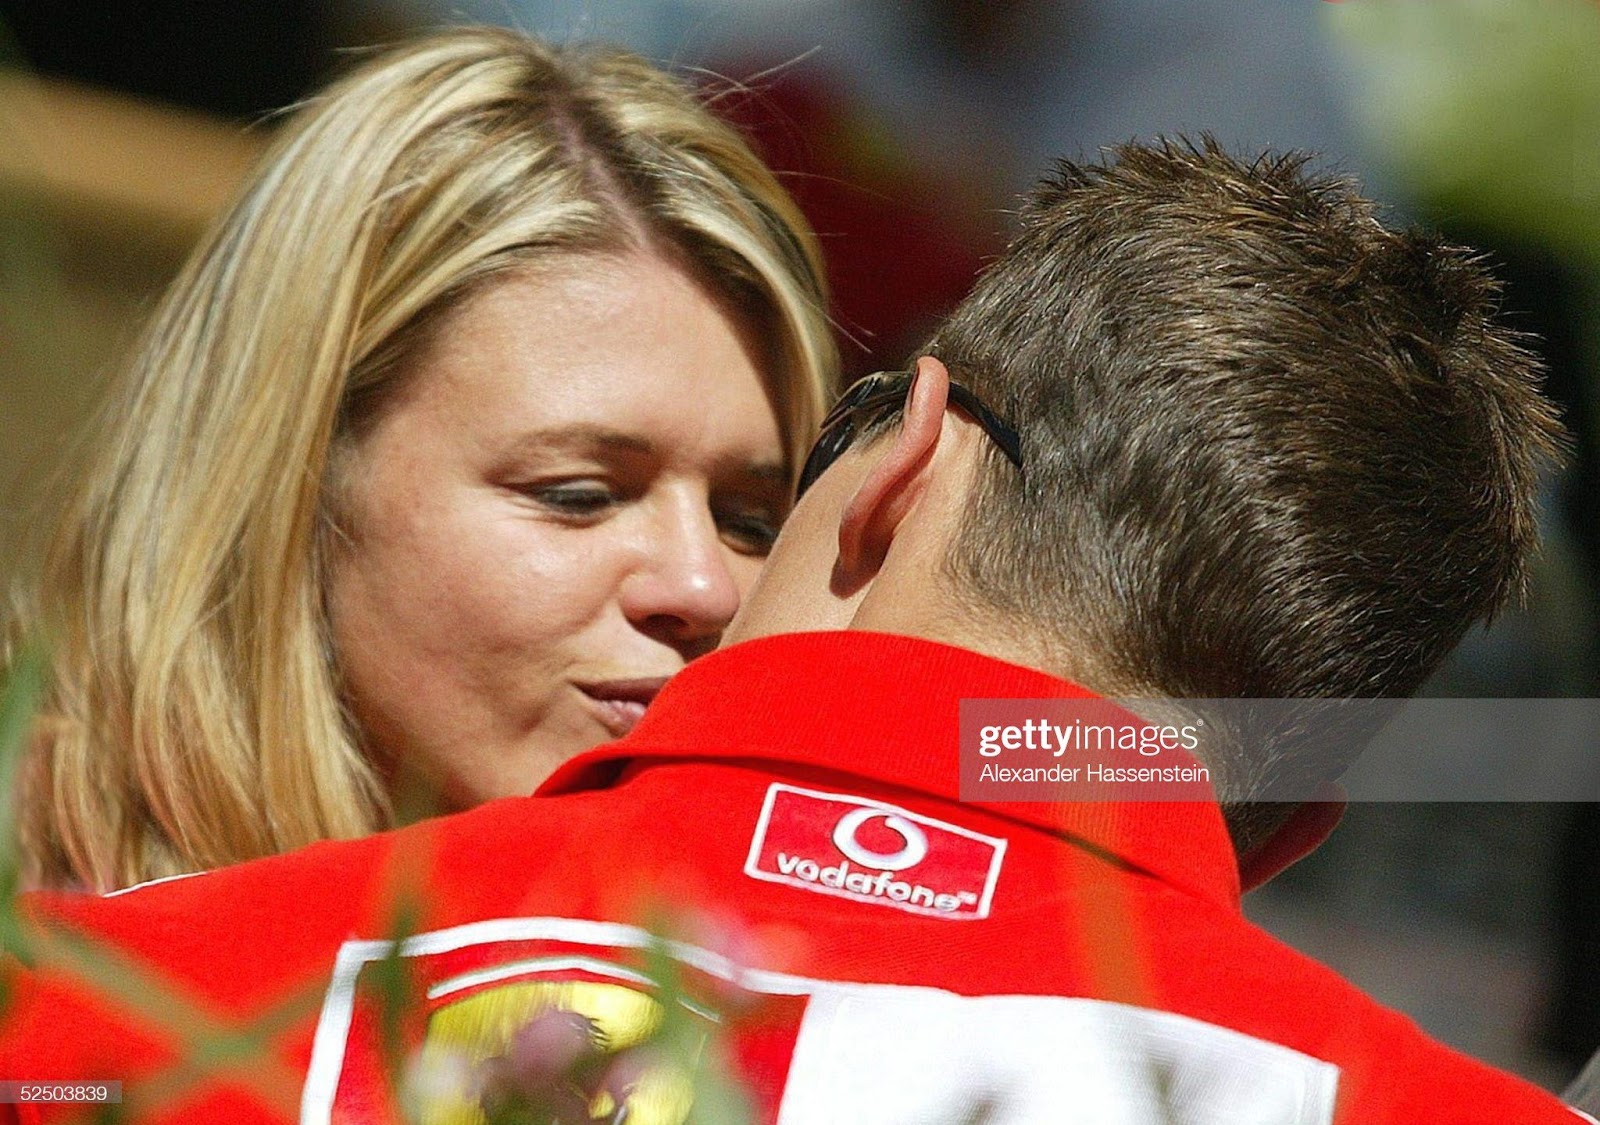 Corinna Schumacher kisses her husband Michael, Ferrari, who won the Canadian Grand Prix in Montreal on June 13, 2004.